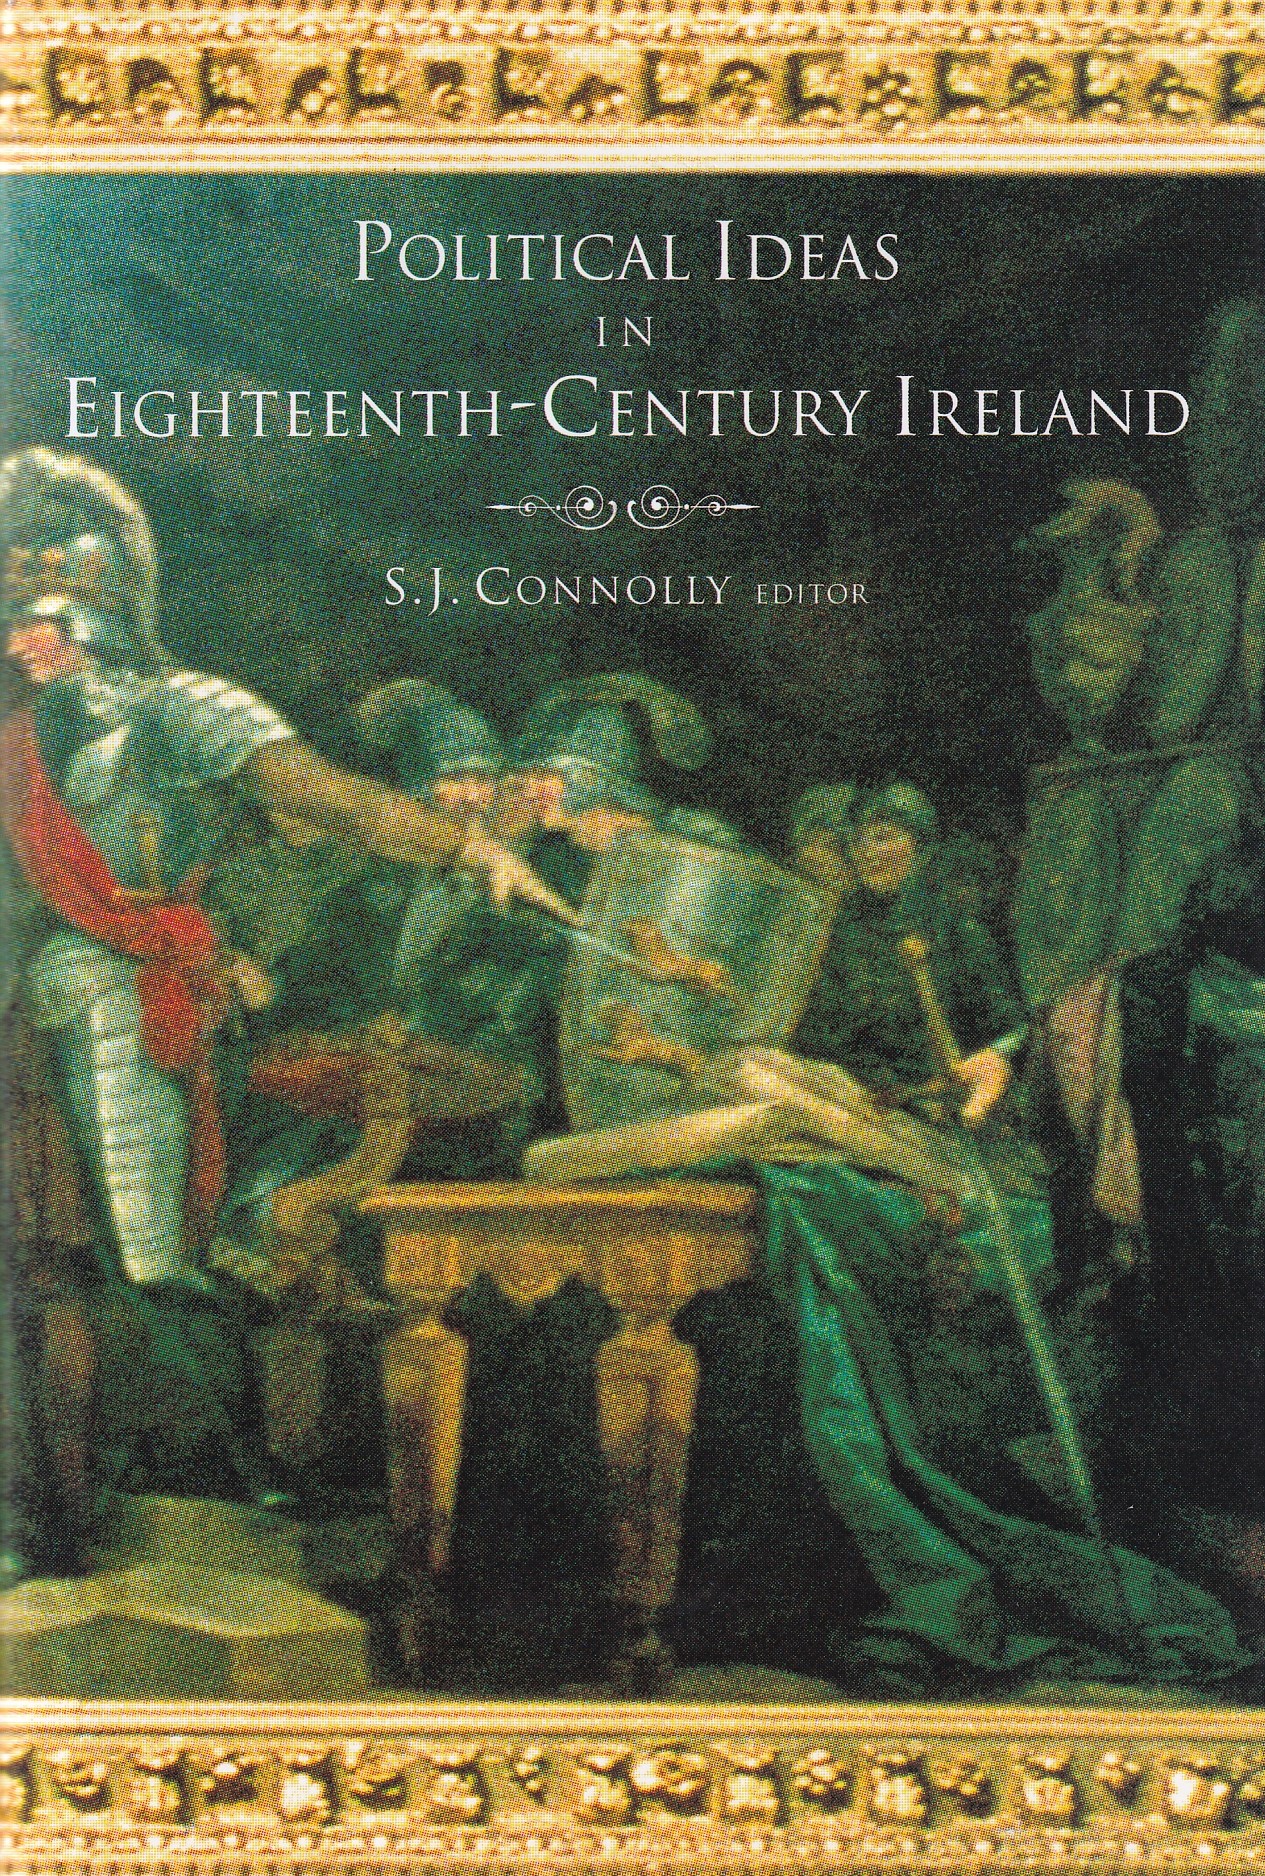 Political Ideas in Eighteenth Century Ireland by S. J. Connolly